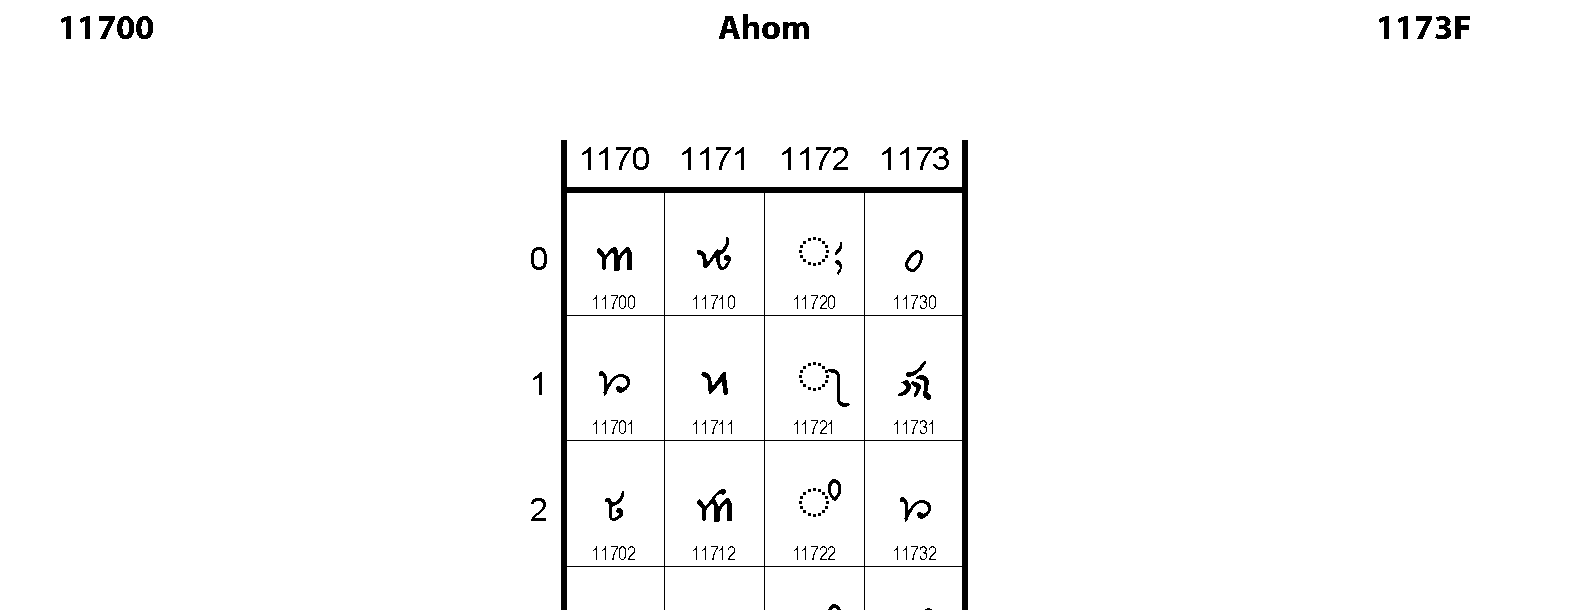 Unicode - Ahom